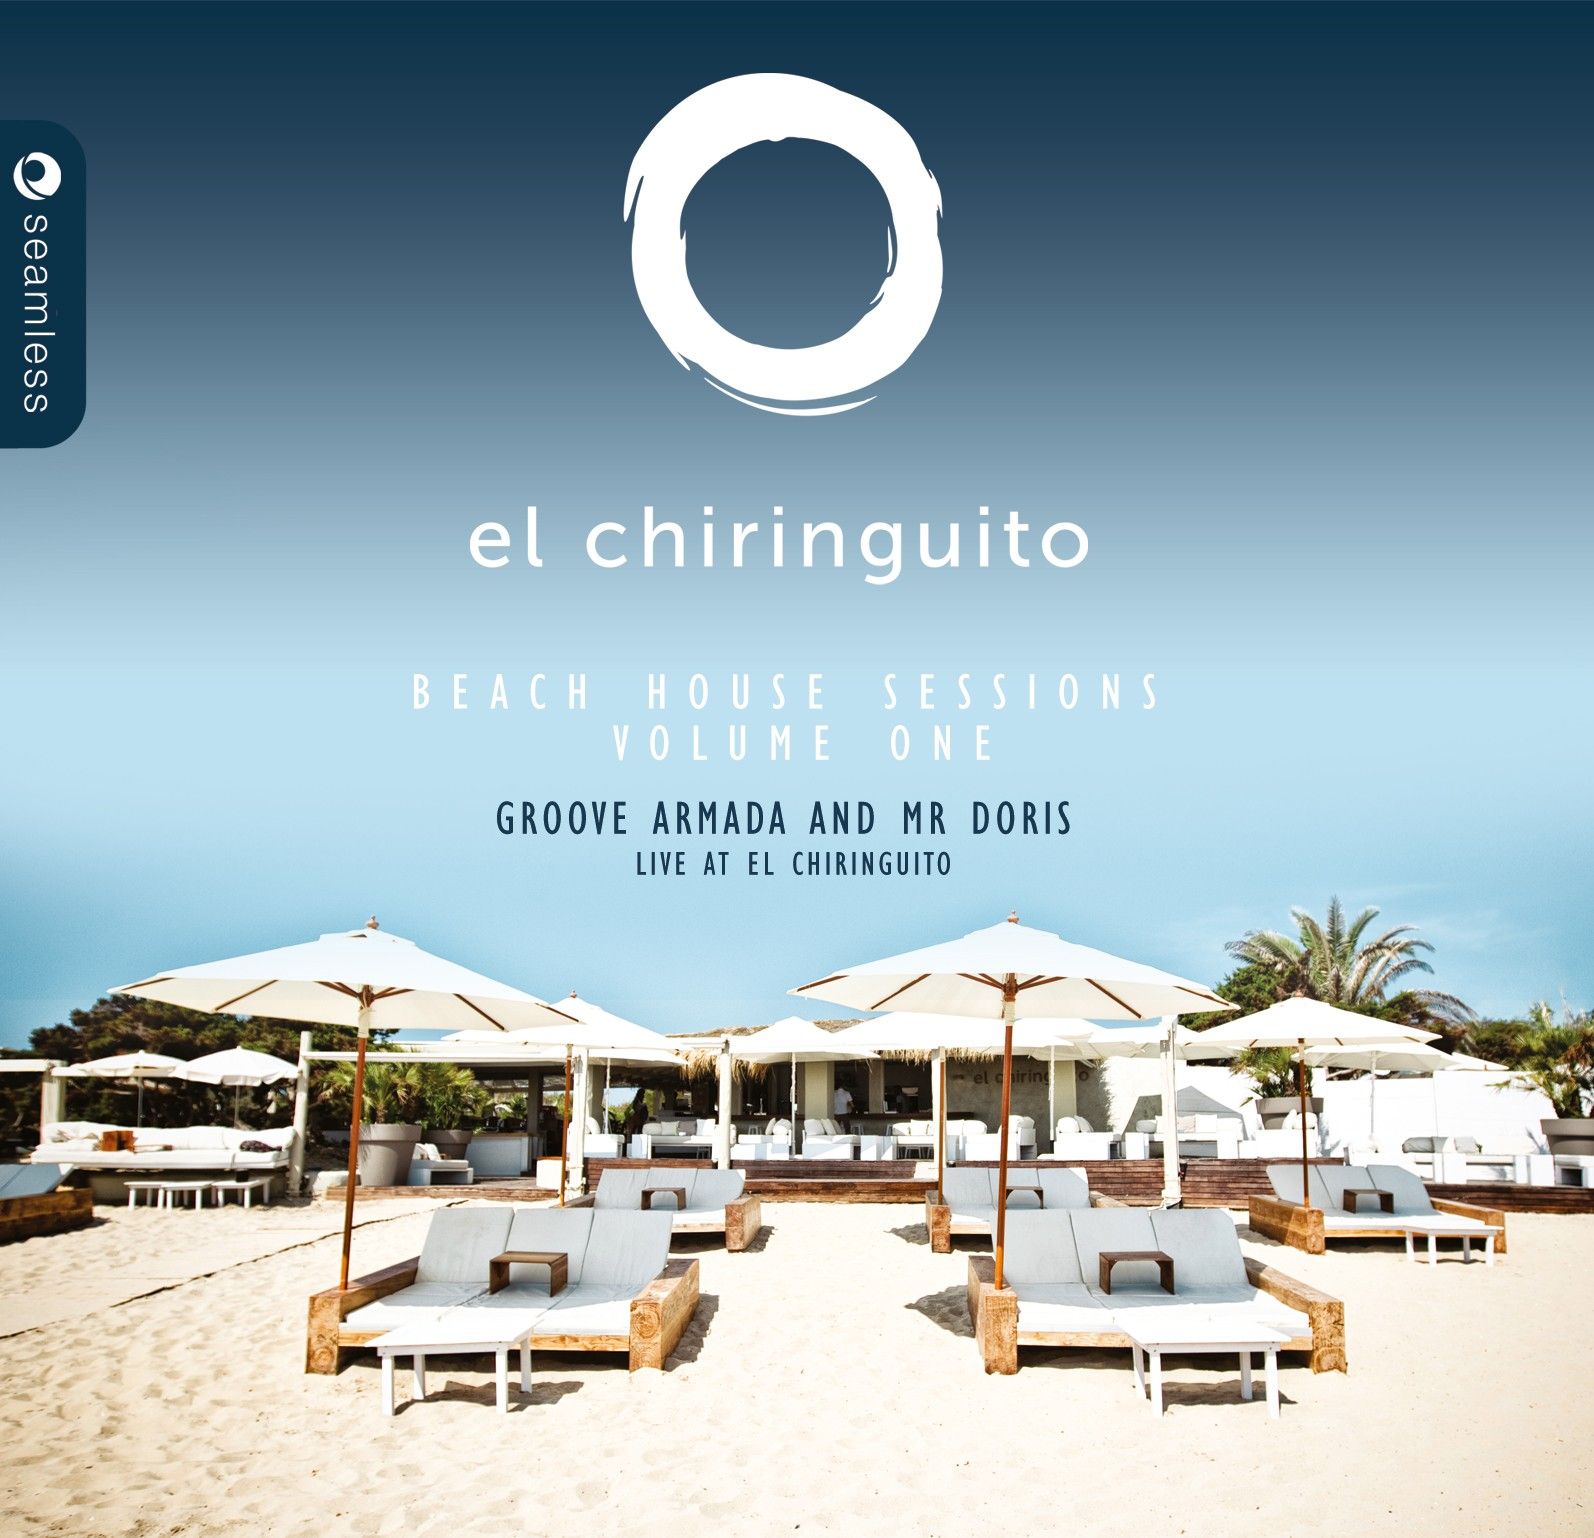 el-chiringuito-beach-house-sessions-volume-one-packshot-hi-res.jpg